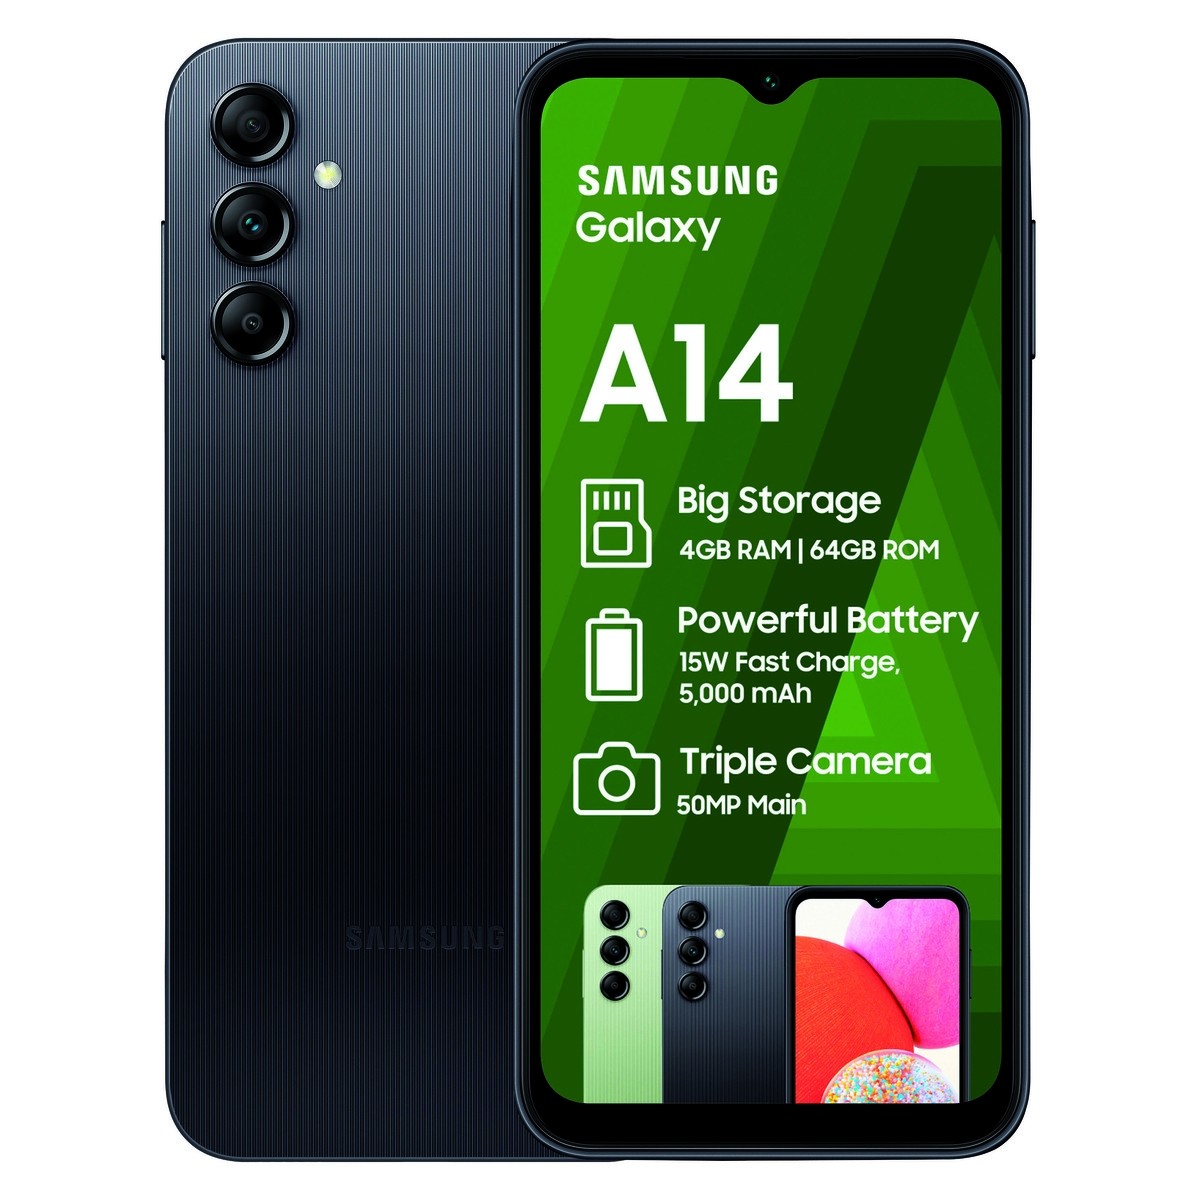 Samsung Galaxy A14, Specs, Battery & Camera